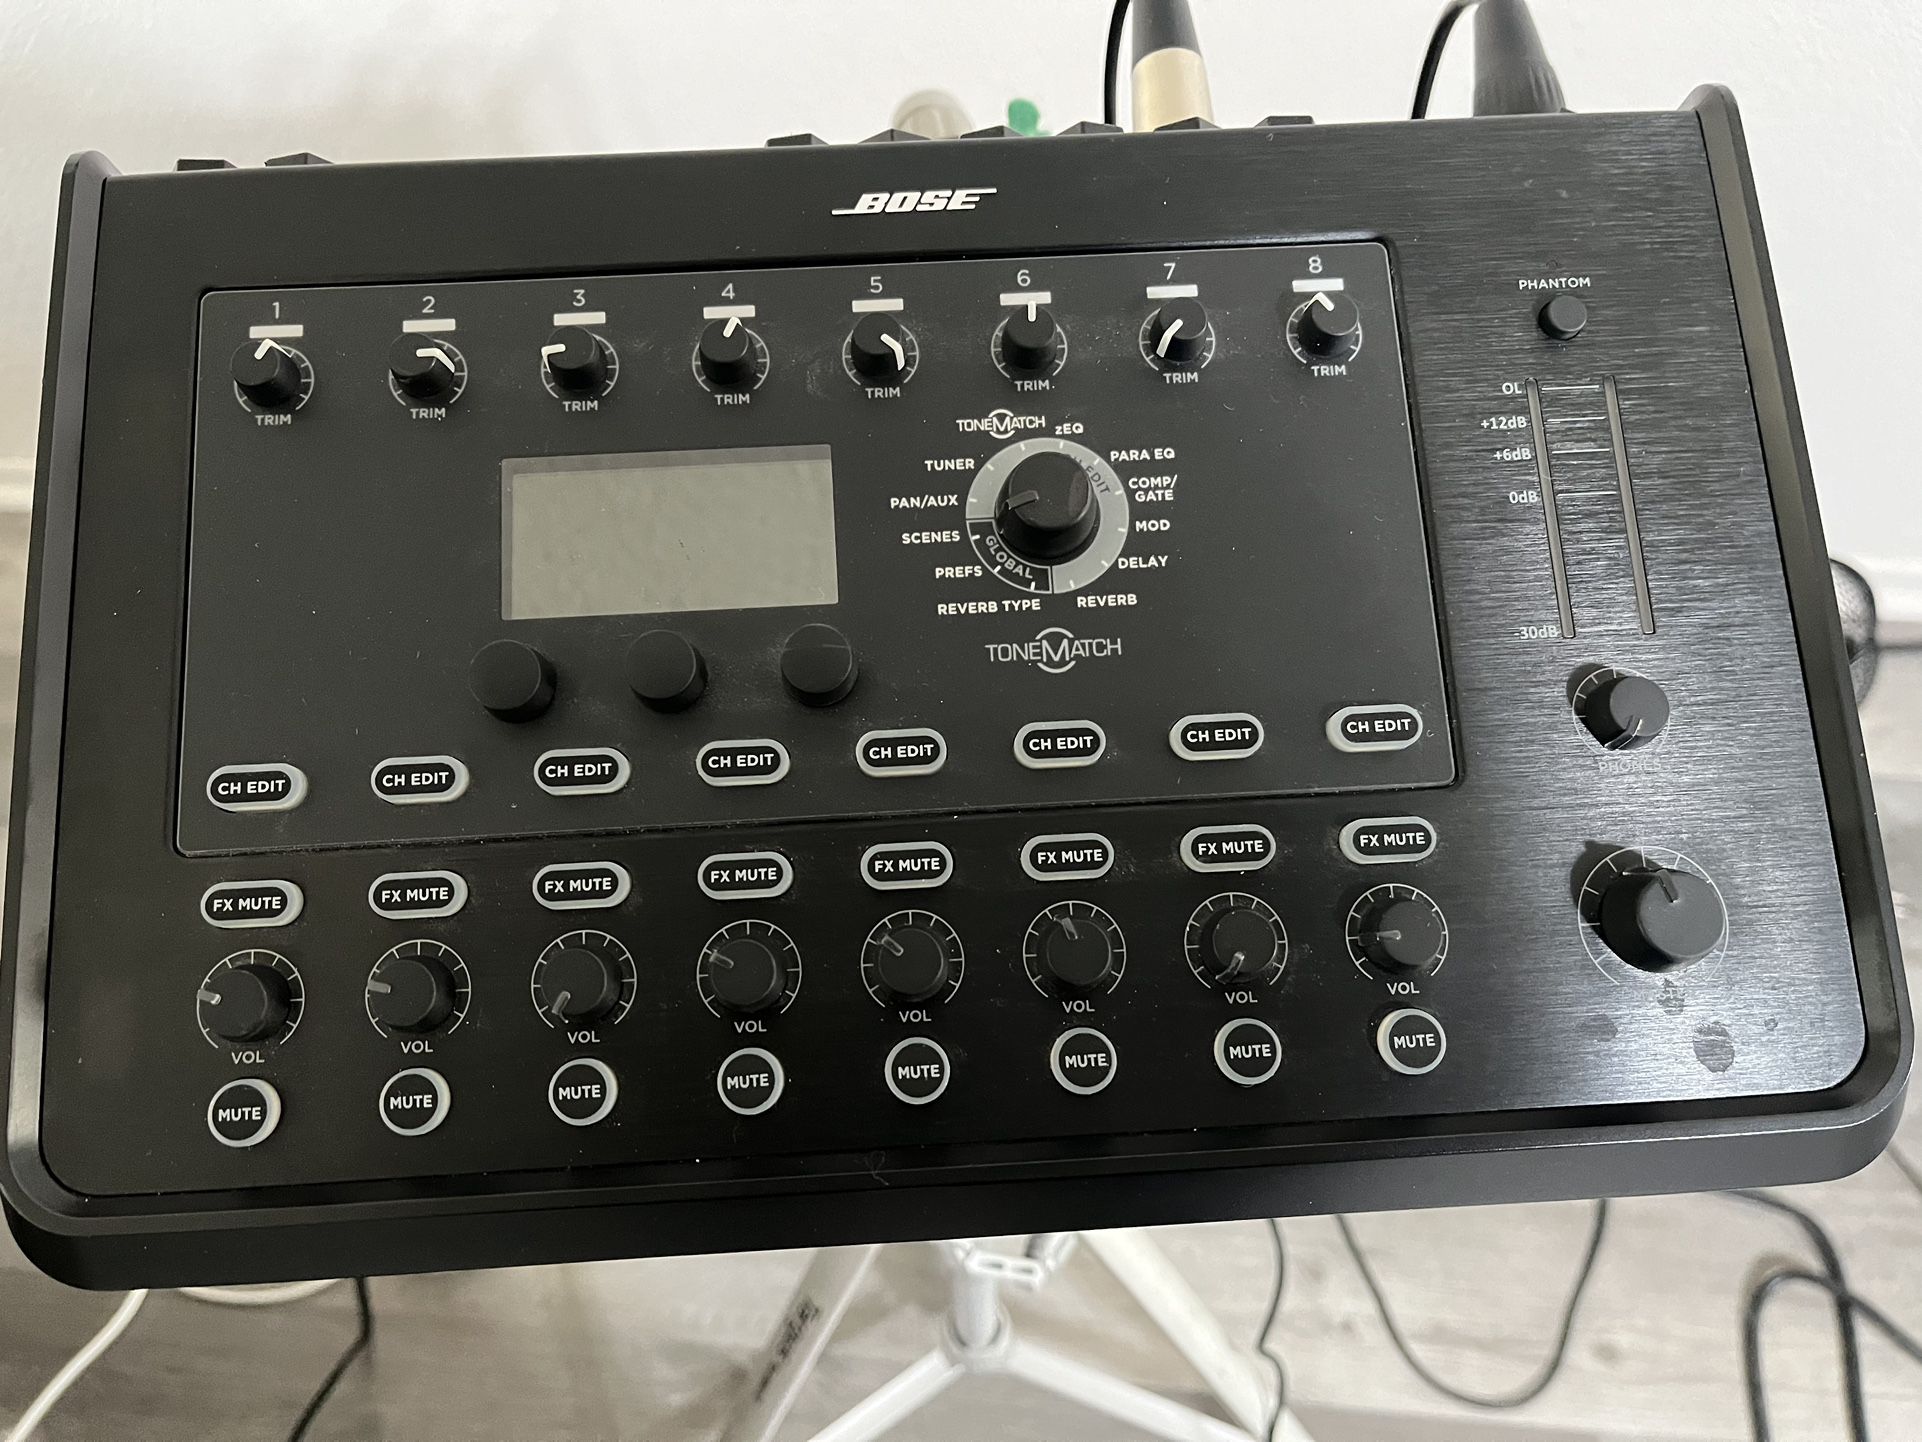 Bose T8s Tonematch Mixer